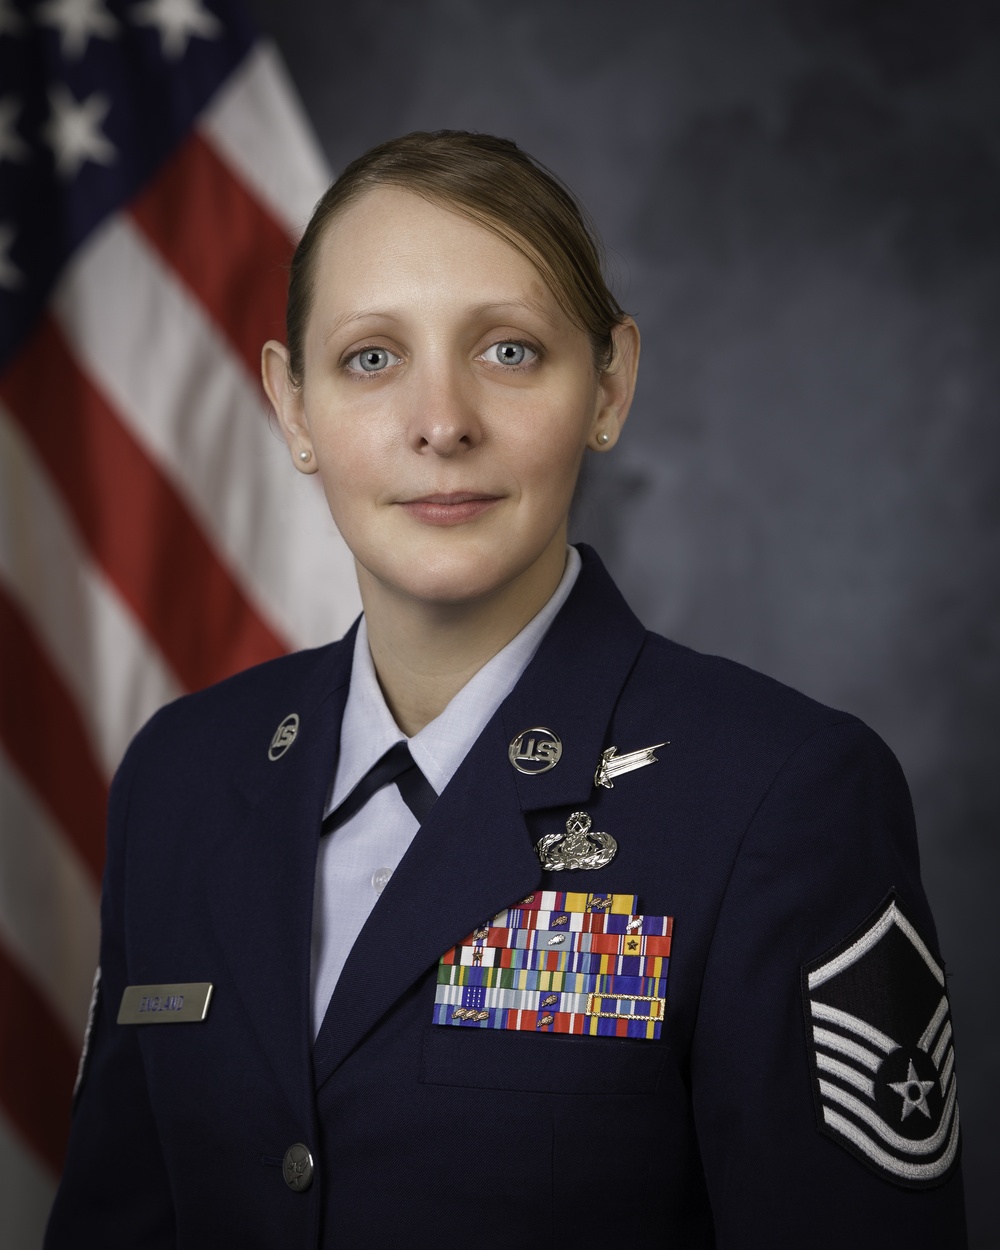 Official portrait, Master Sgt. Michelle M. England, US Air Force